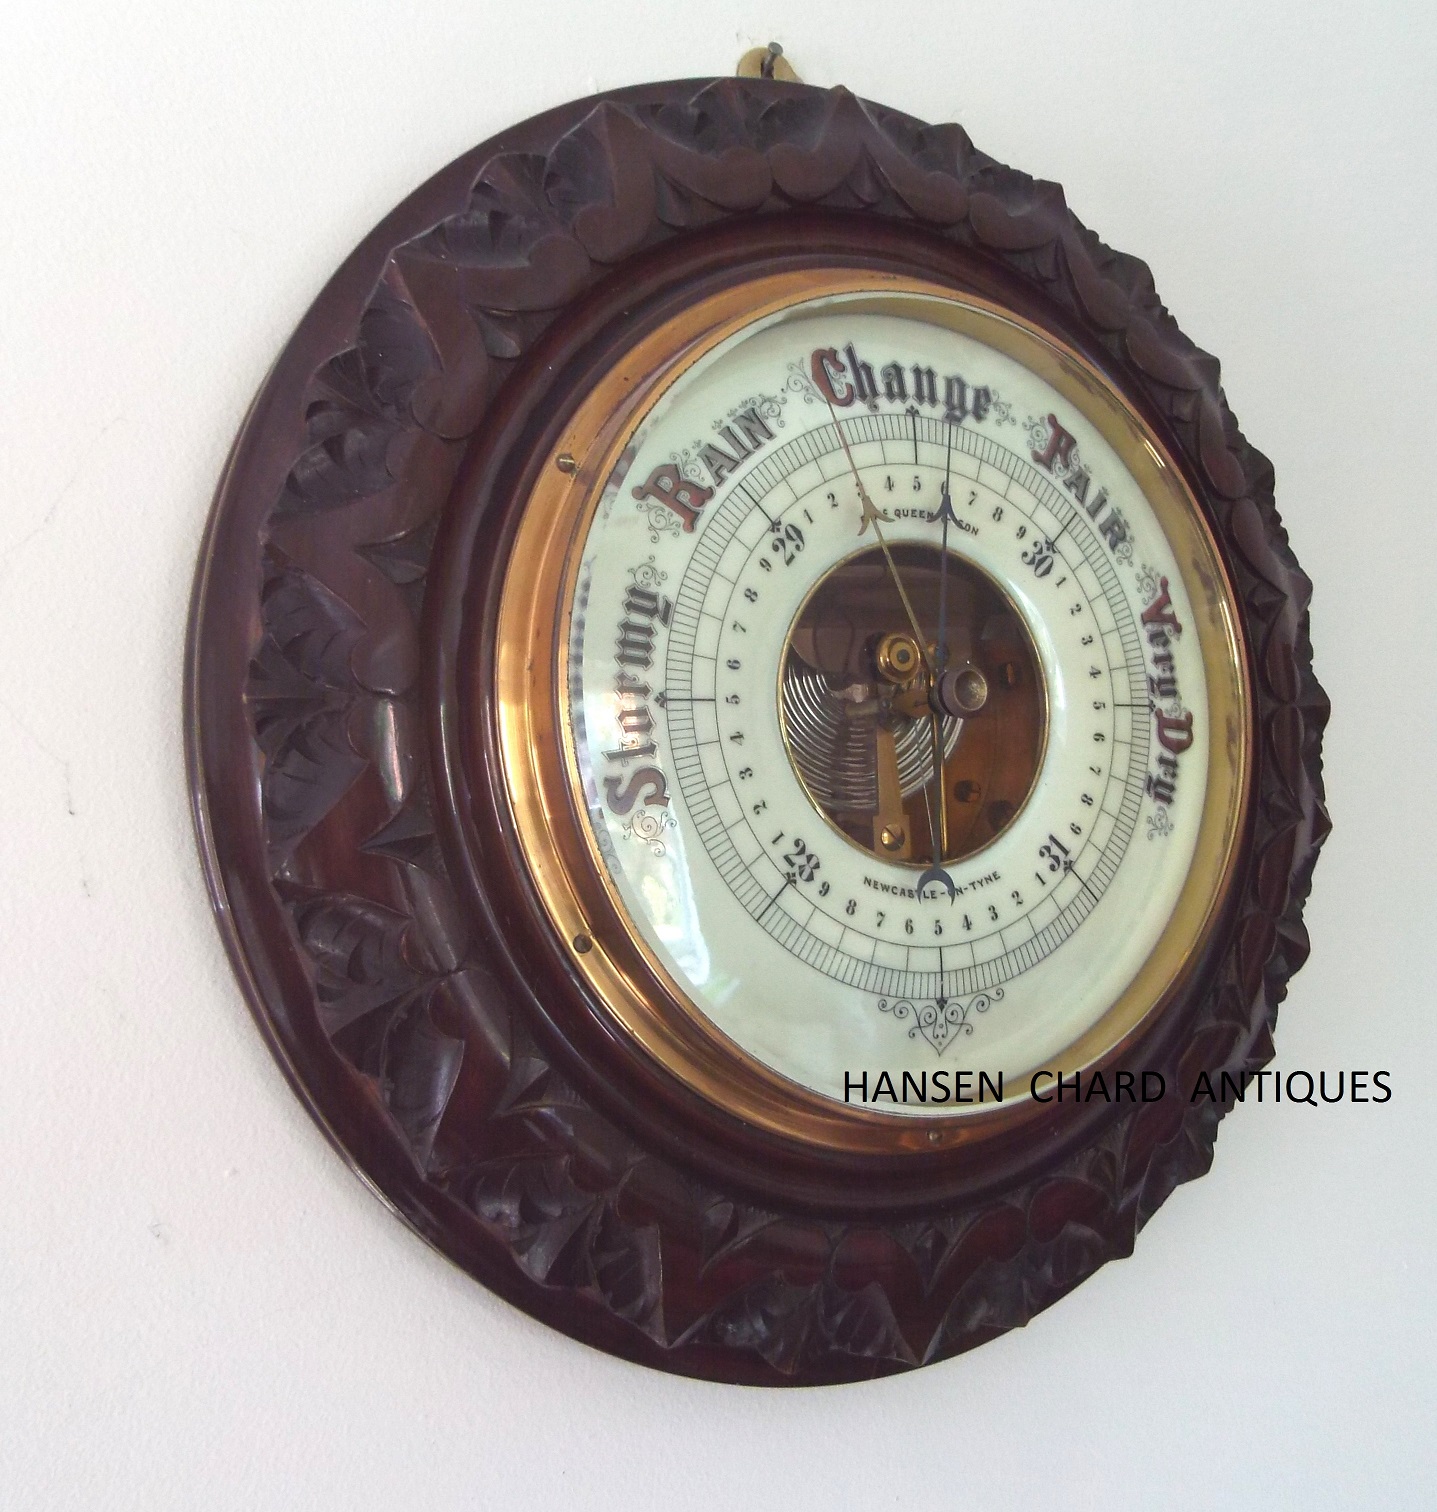 Hansen Chard Antiques, The Old Clock Shop, Pershore - Mantle Clocks